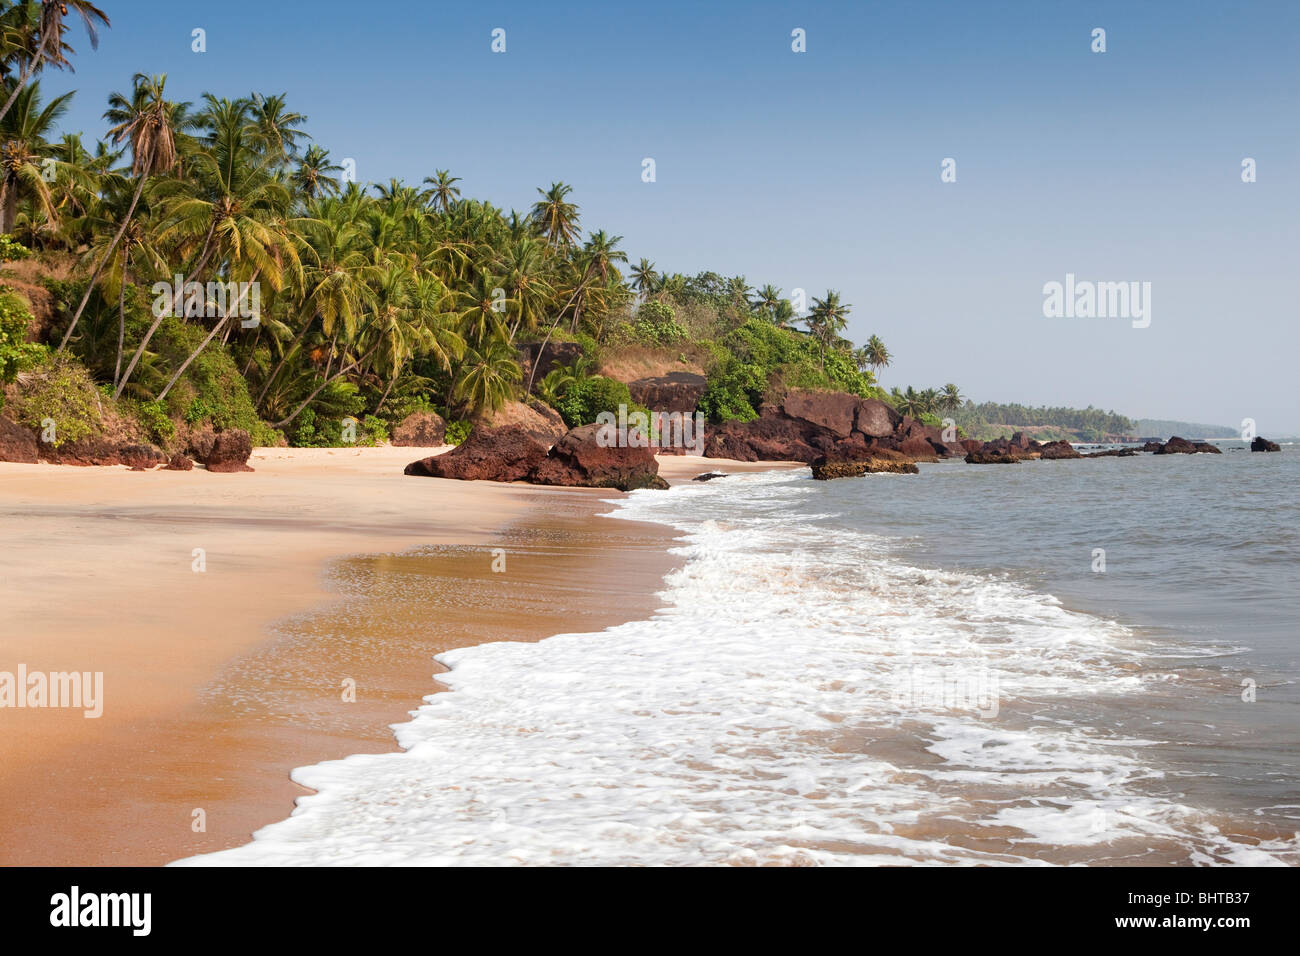 L'Inde, le Kerala, Cannanore (Kannur), Adhi Kadalai, Costa Malabari petite plage idyllique Banque D'Images